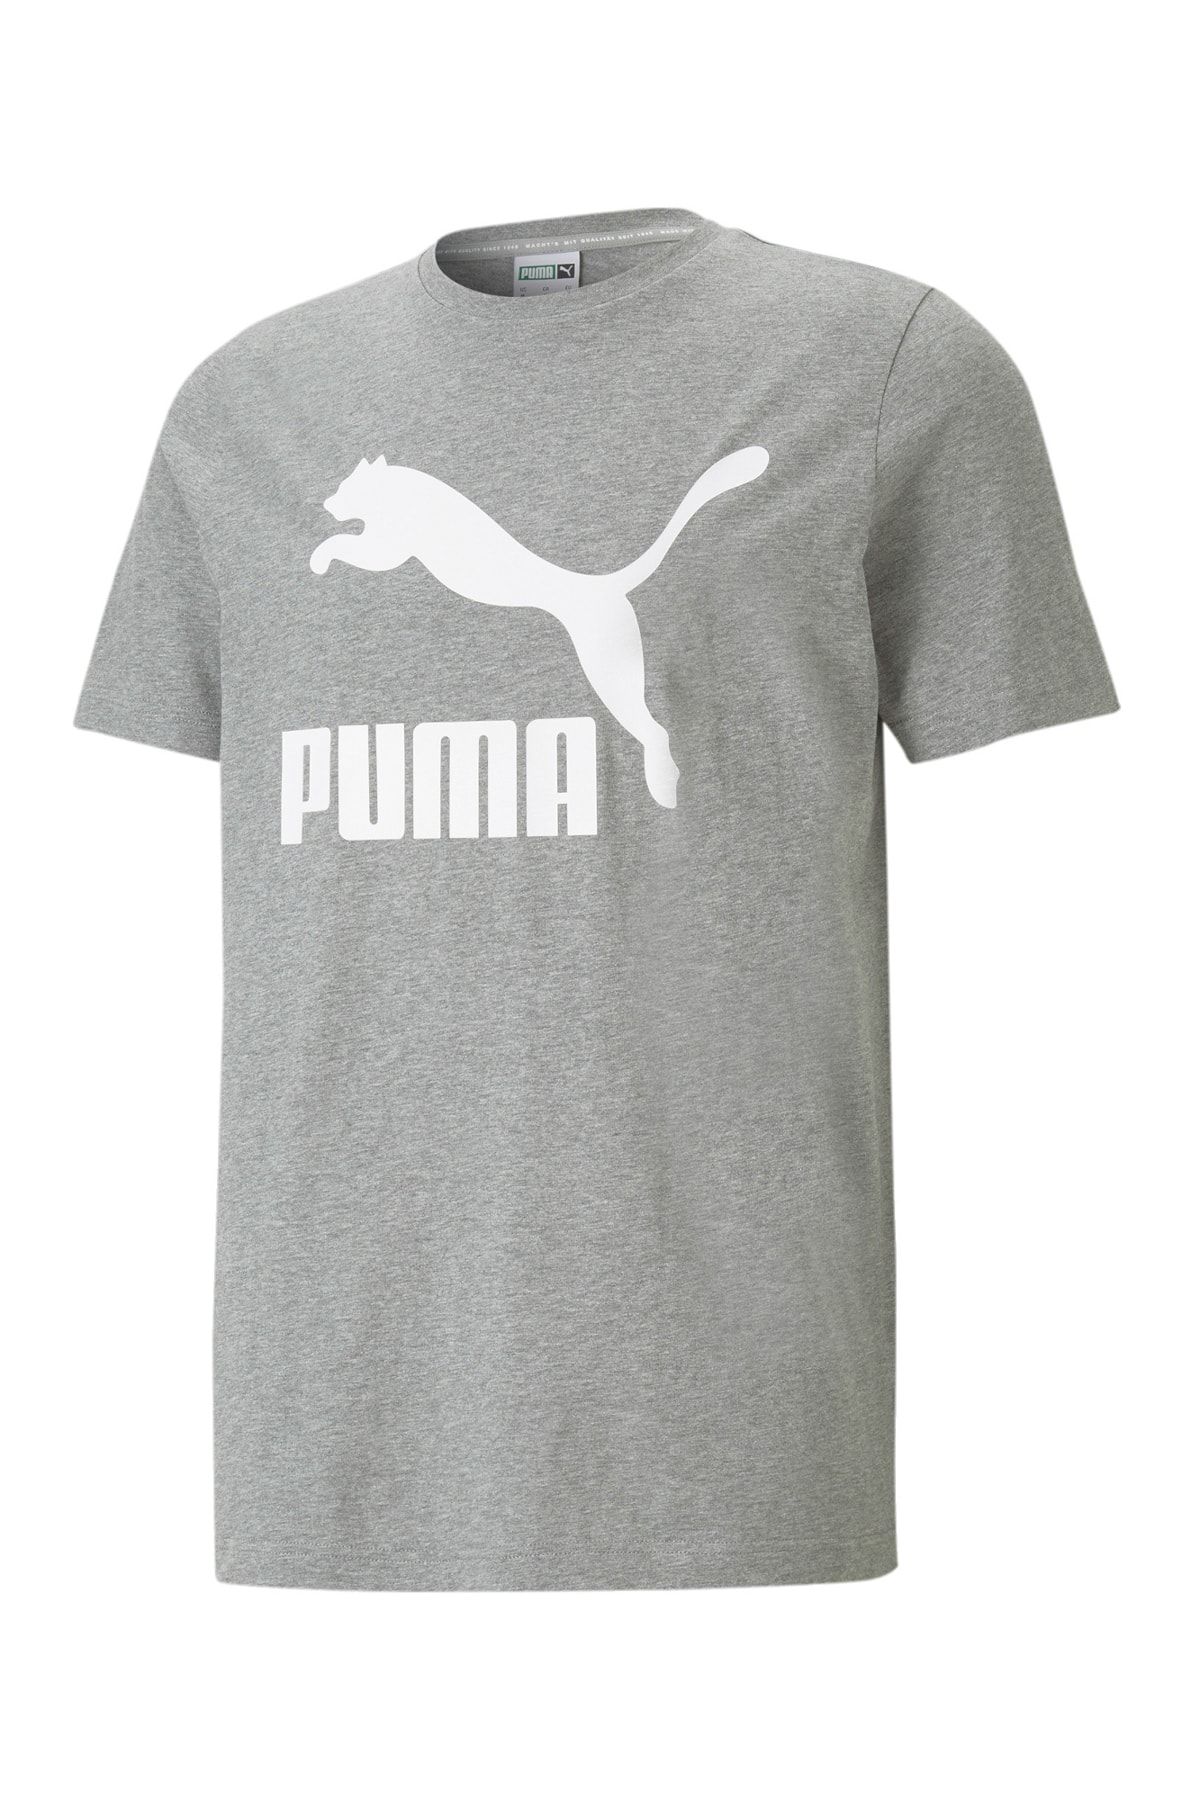 Puma Classics Logo Tee Medium G